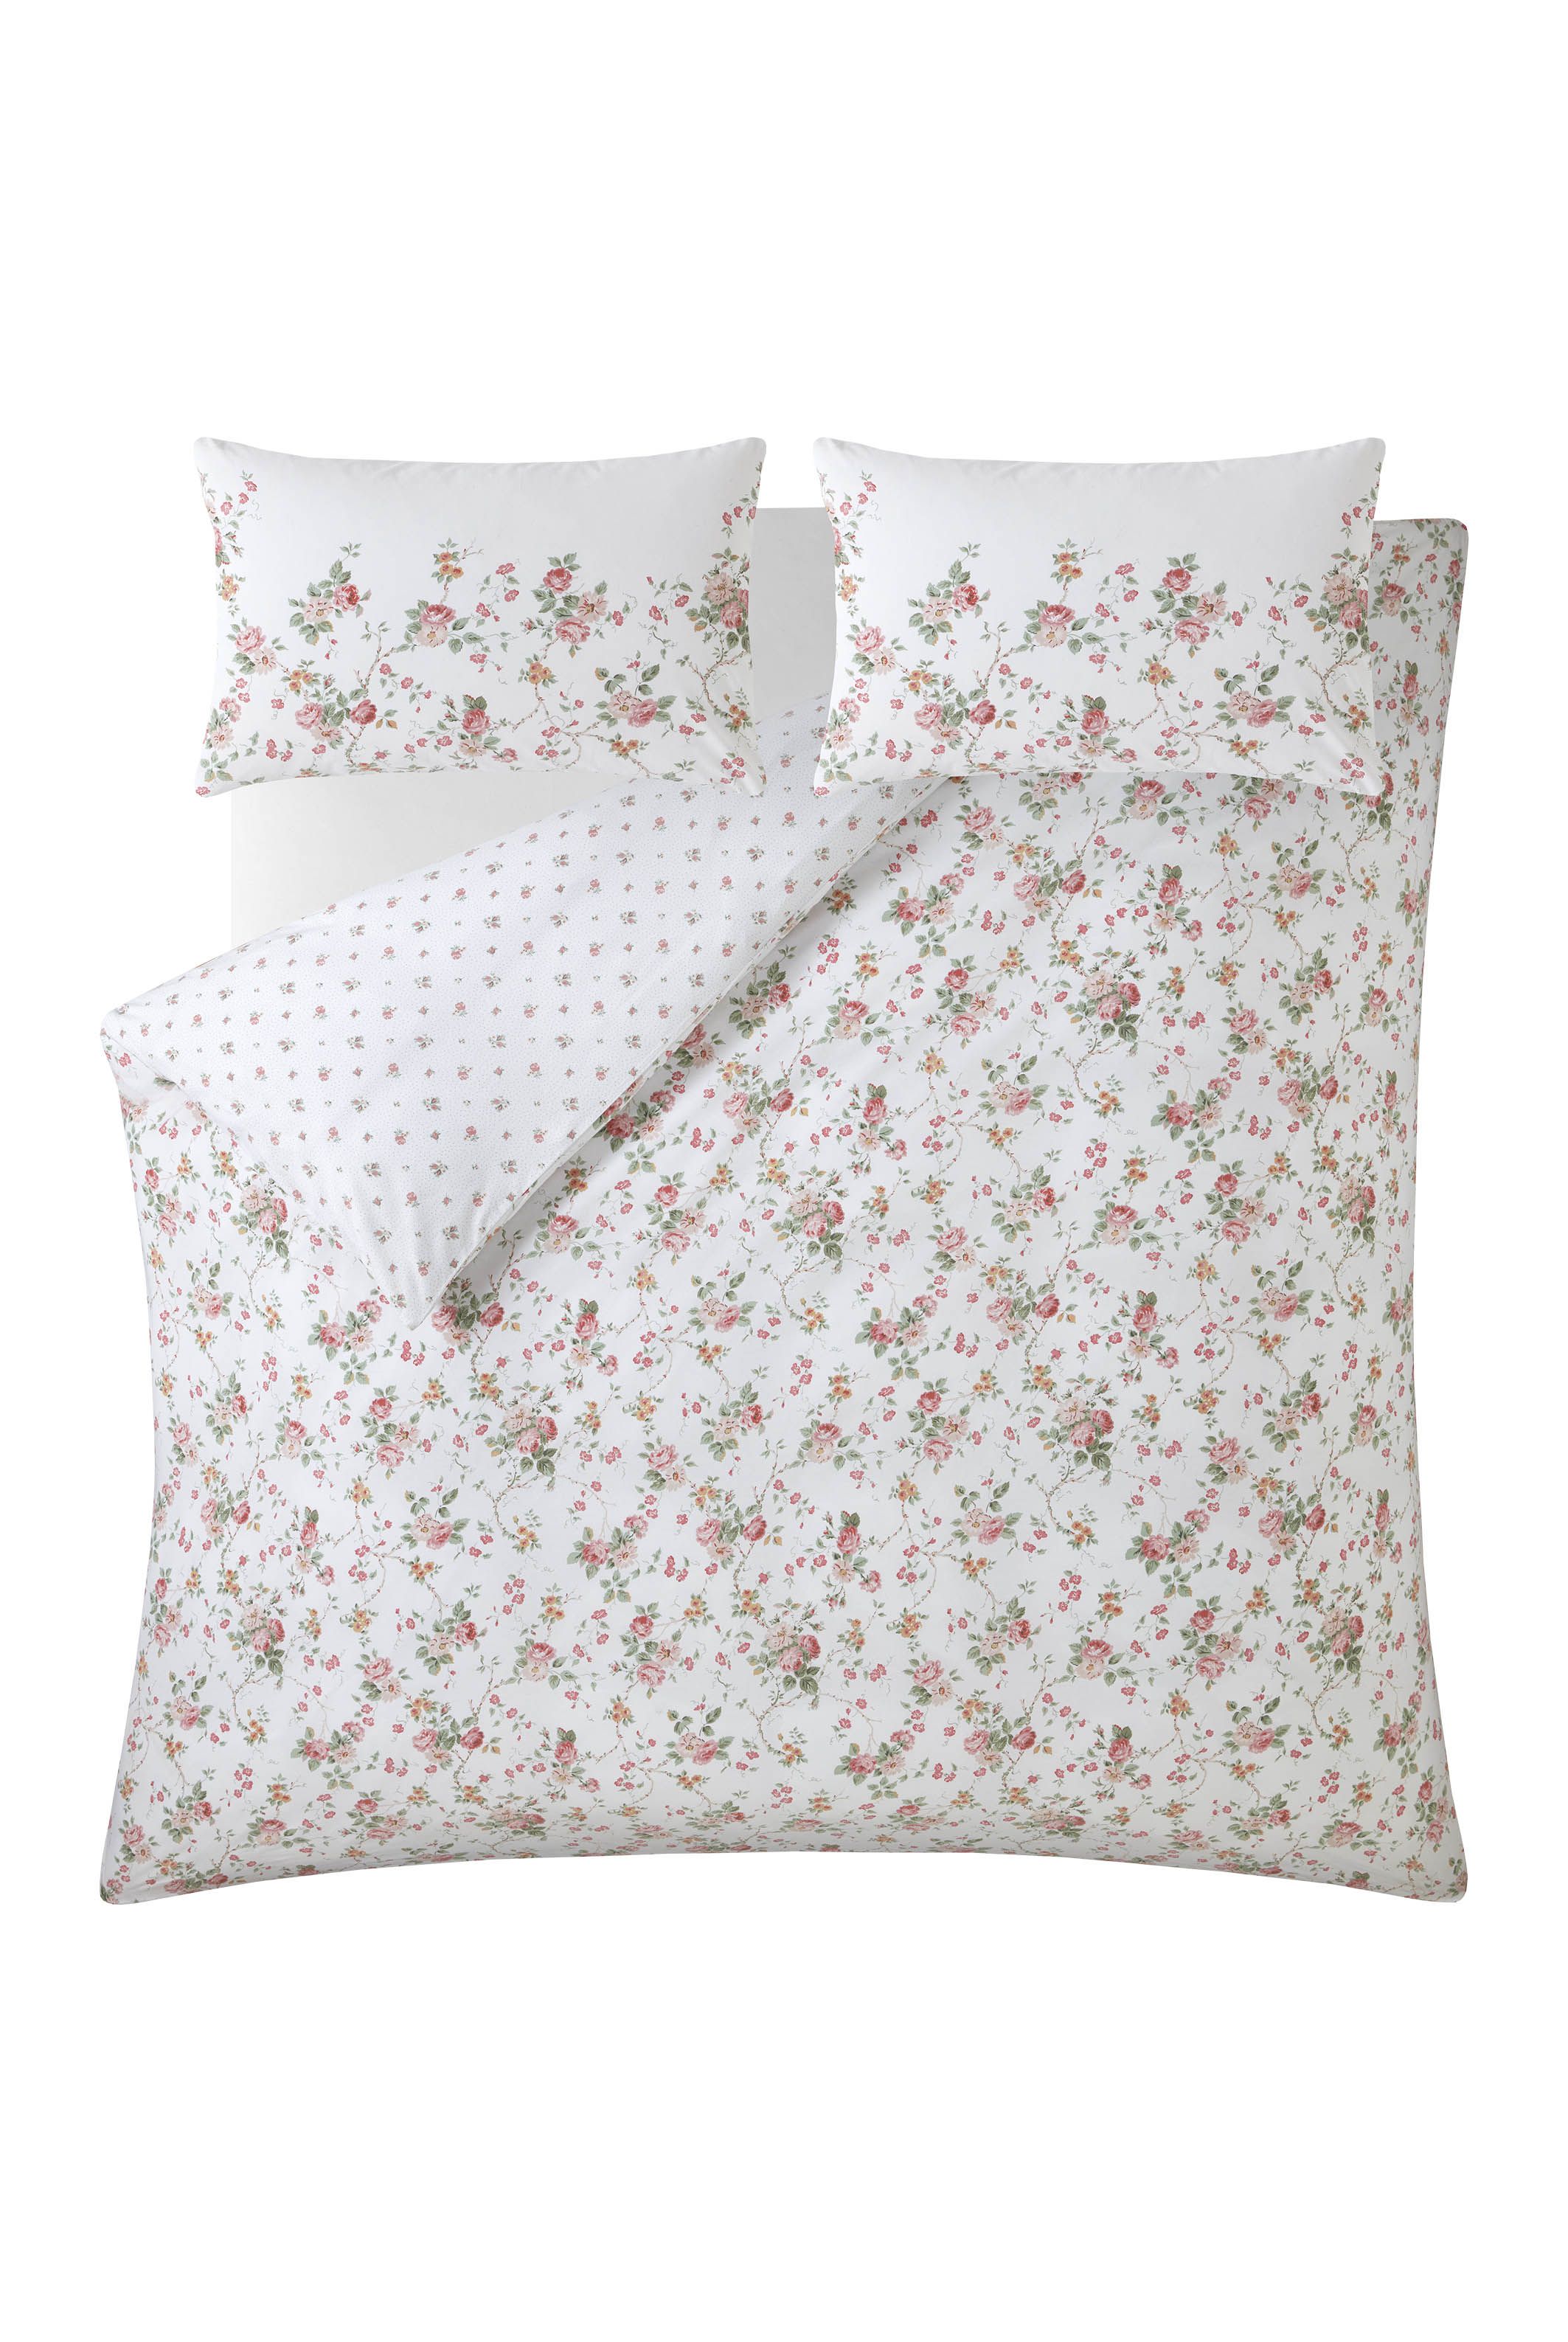 Laura Ashley Mountney Garden Antique Pink Duvet Cover and Pillowcase Set